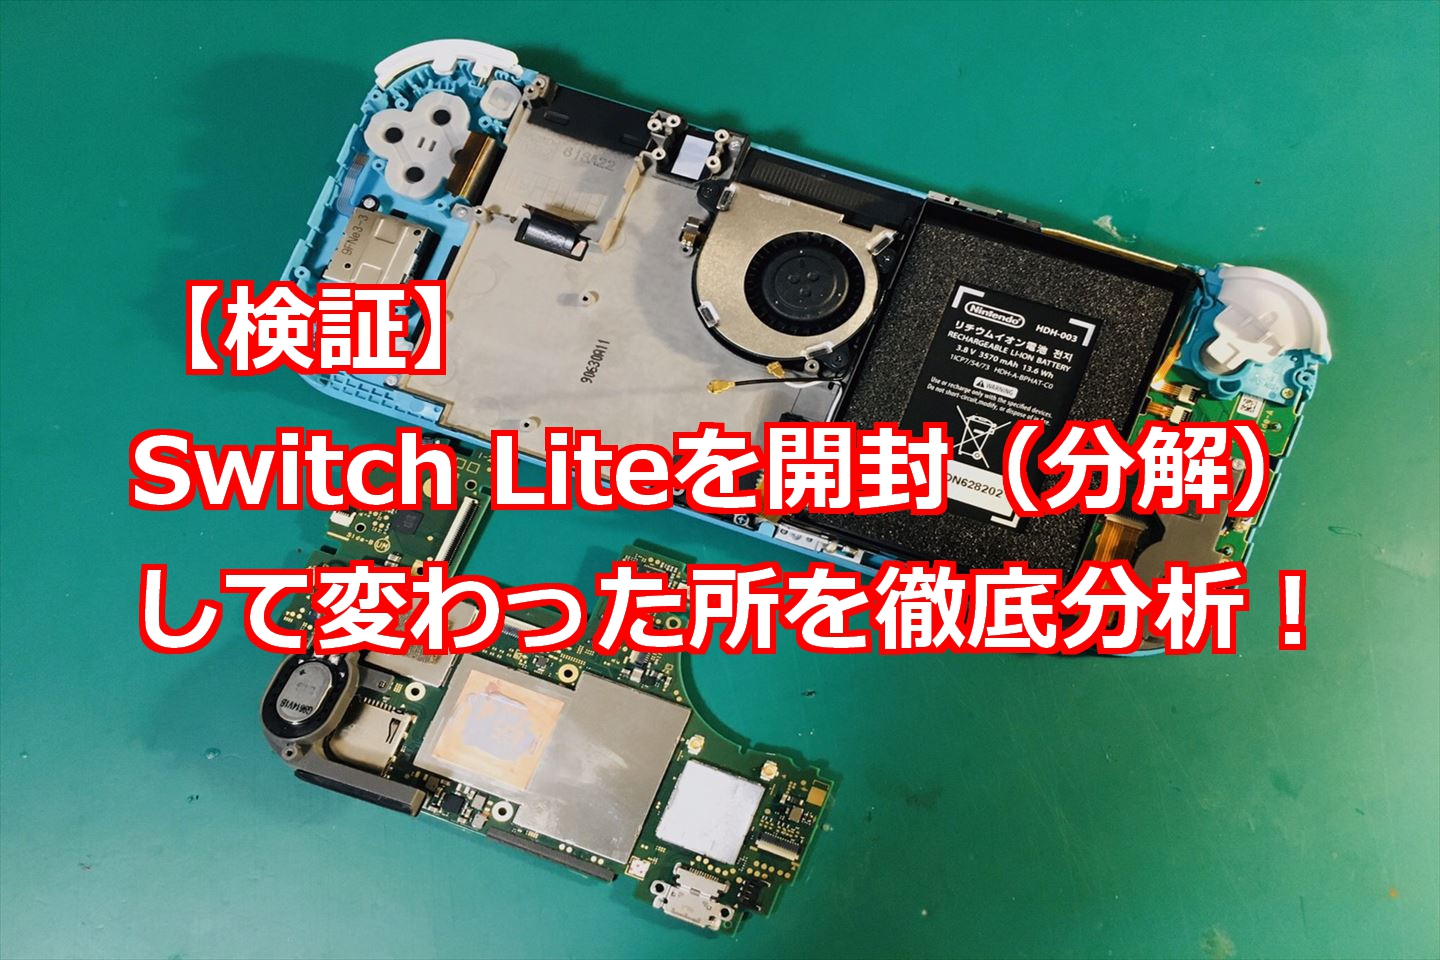 Switch Liteを開封 分解 して修理のしやすさを徹底分析 動画付き スマライフ